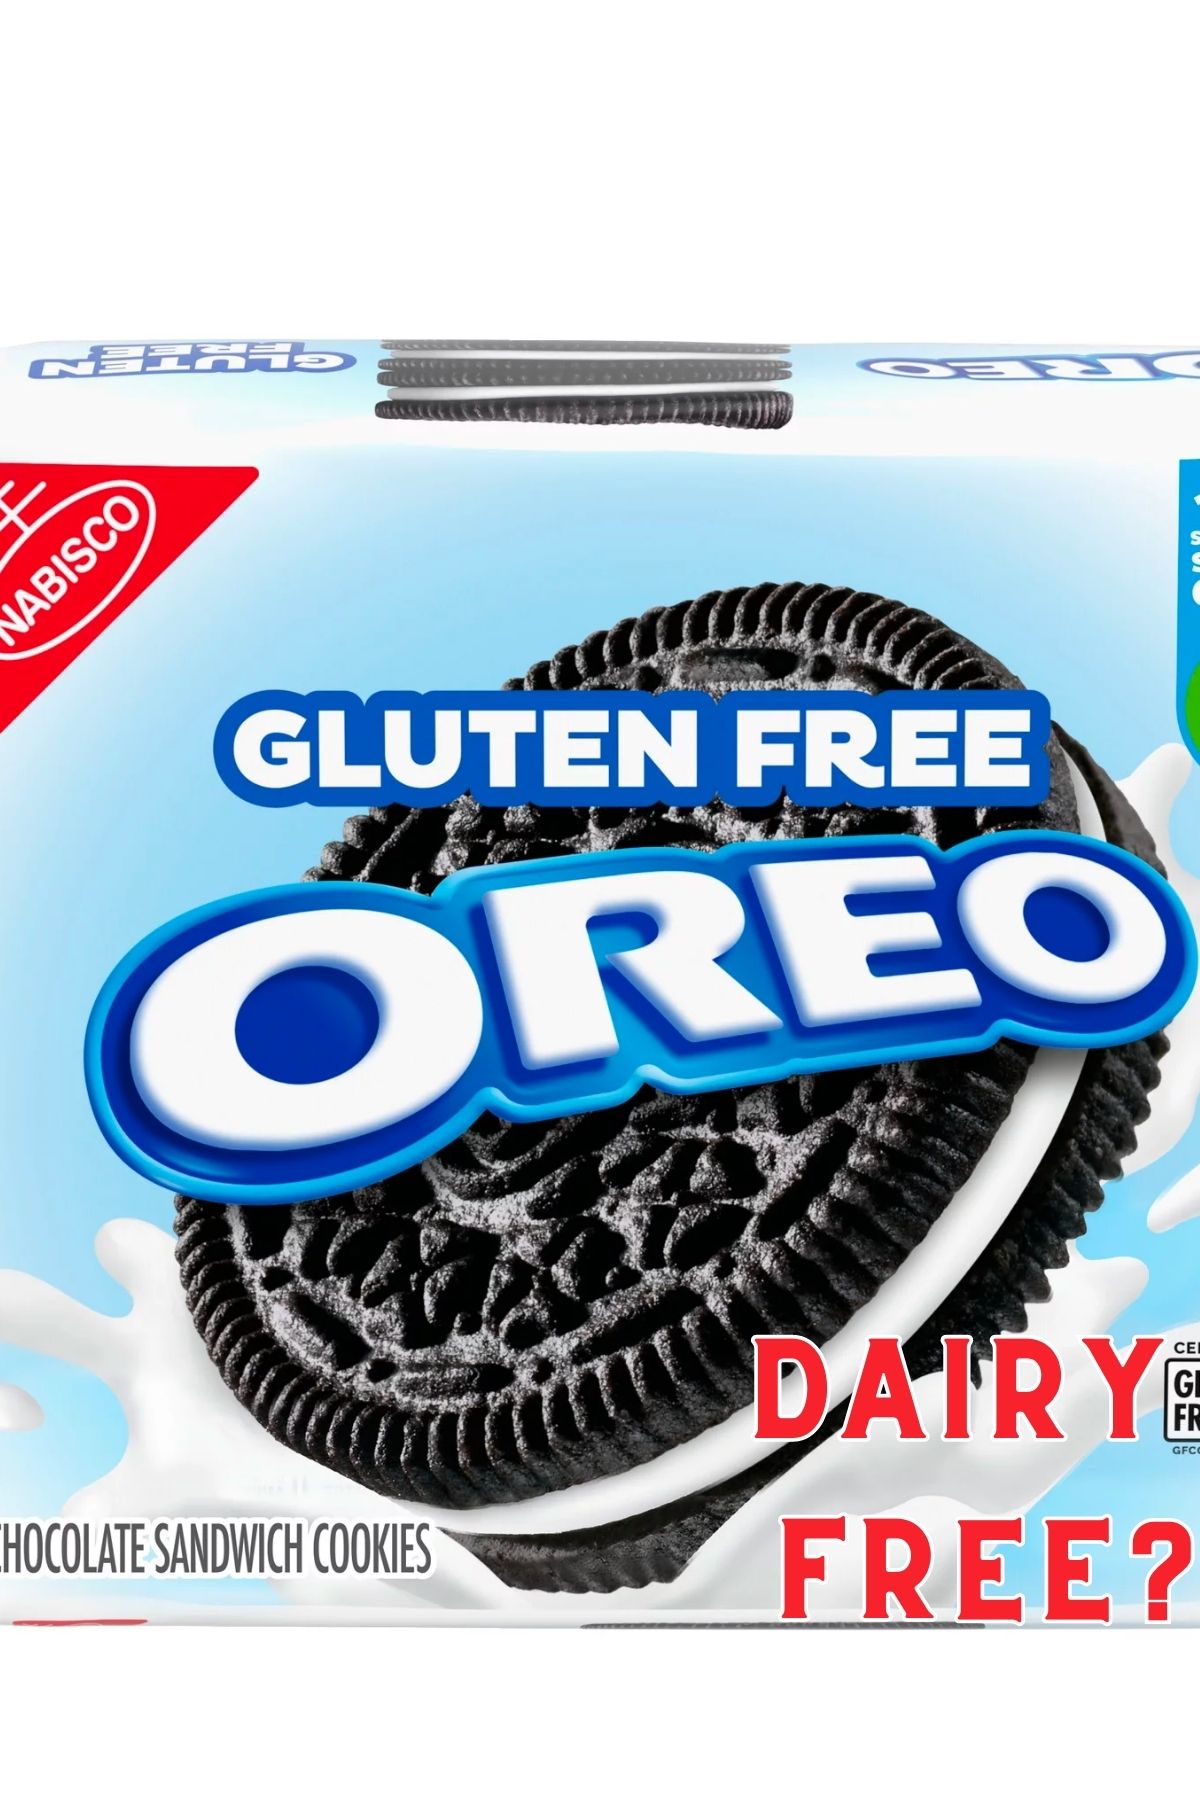 are gluten free oreos dairy free